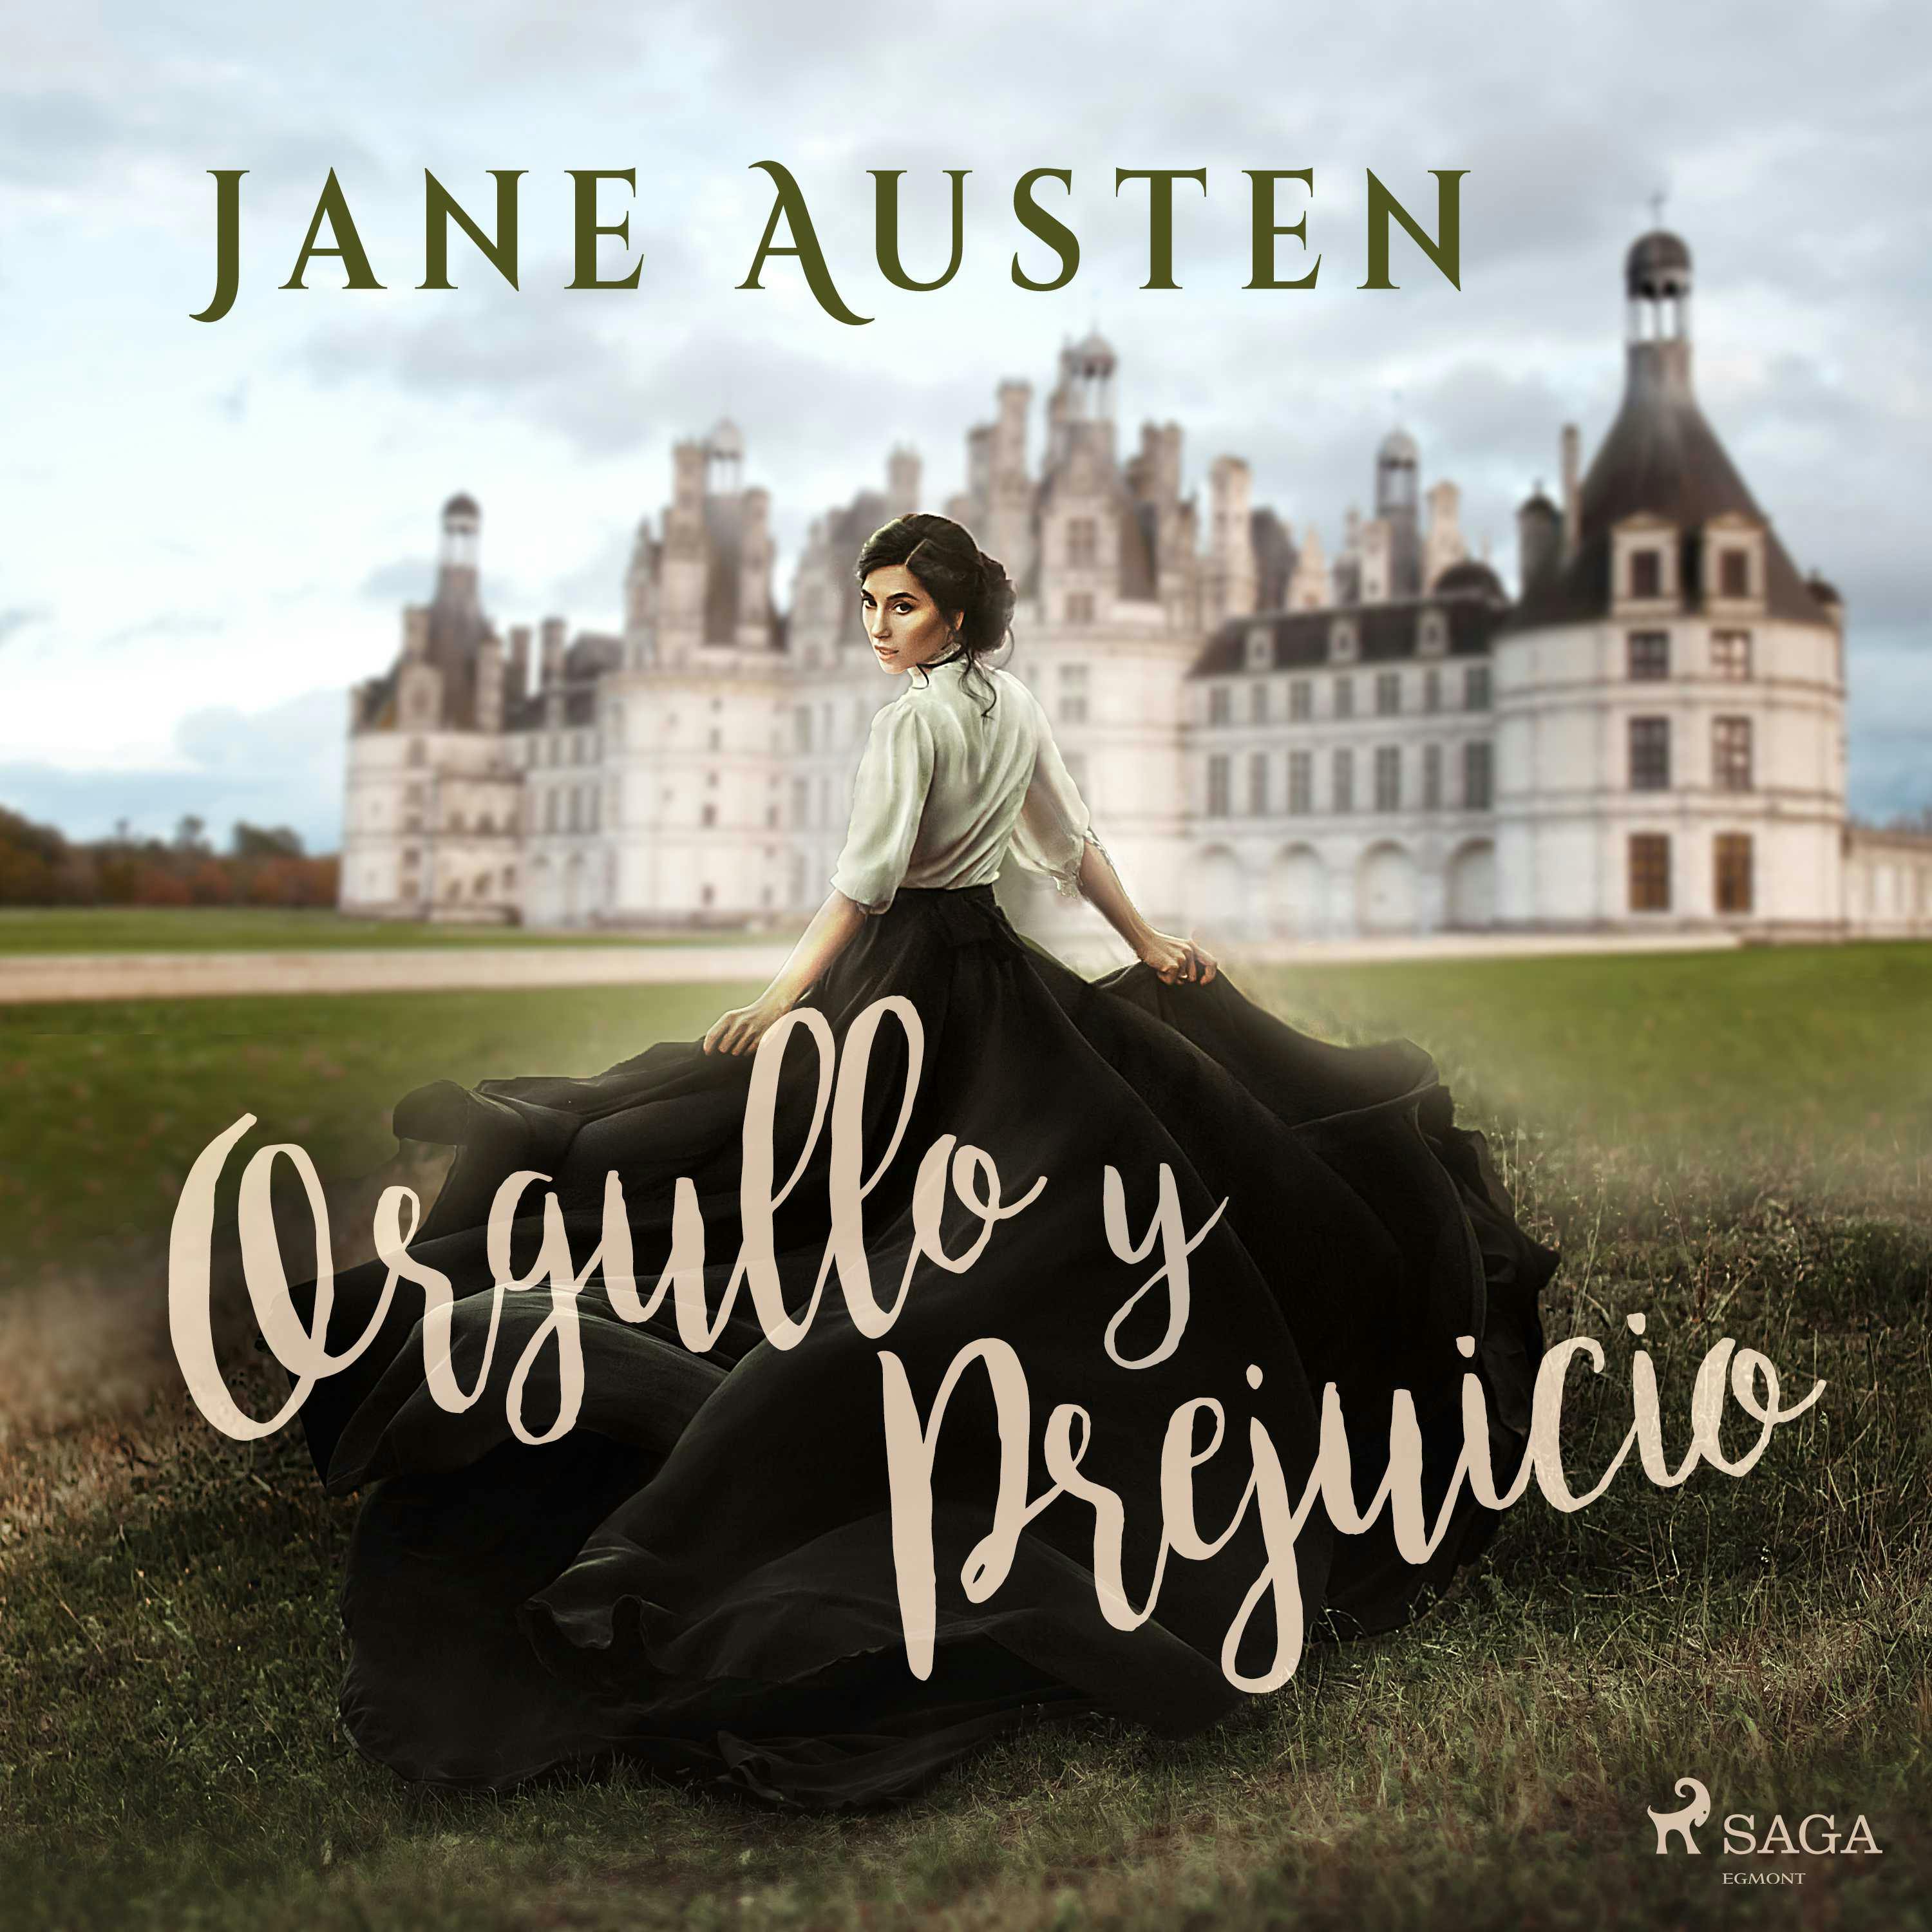 Orgullo Y Prejuicio, Audiobook, Jane Austen